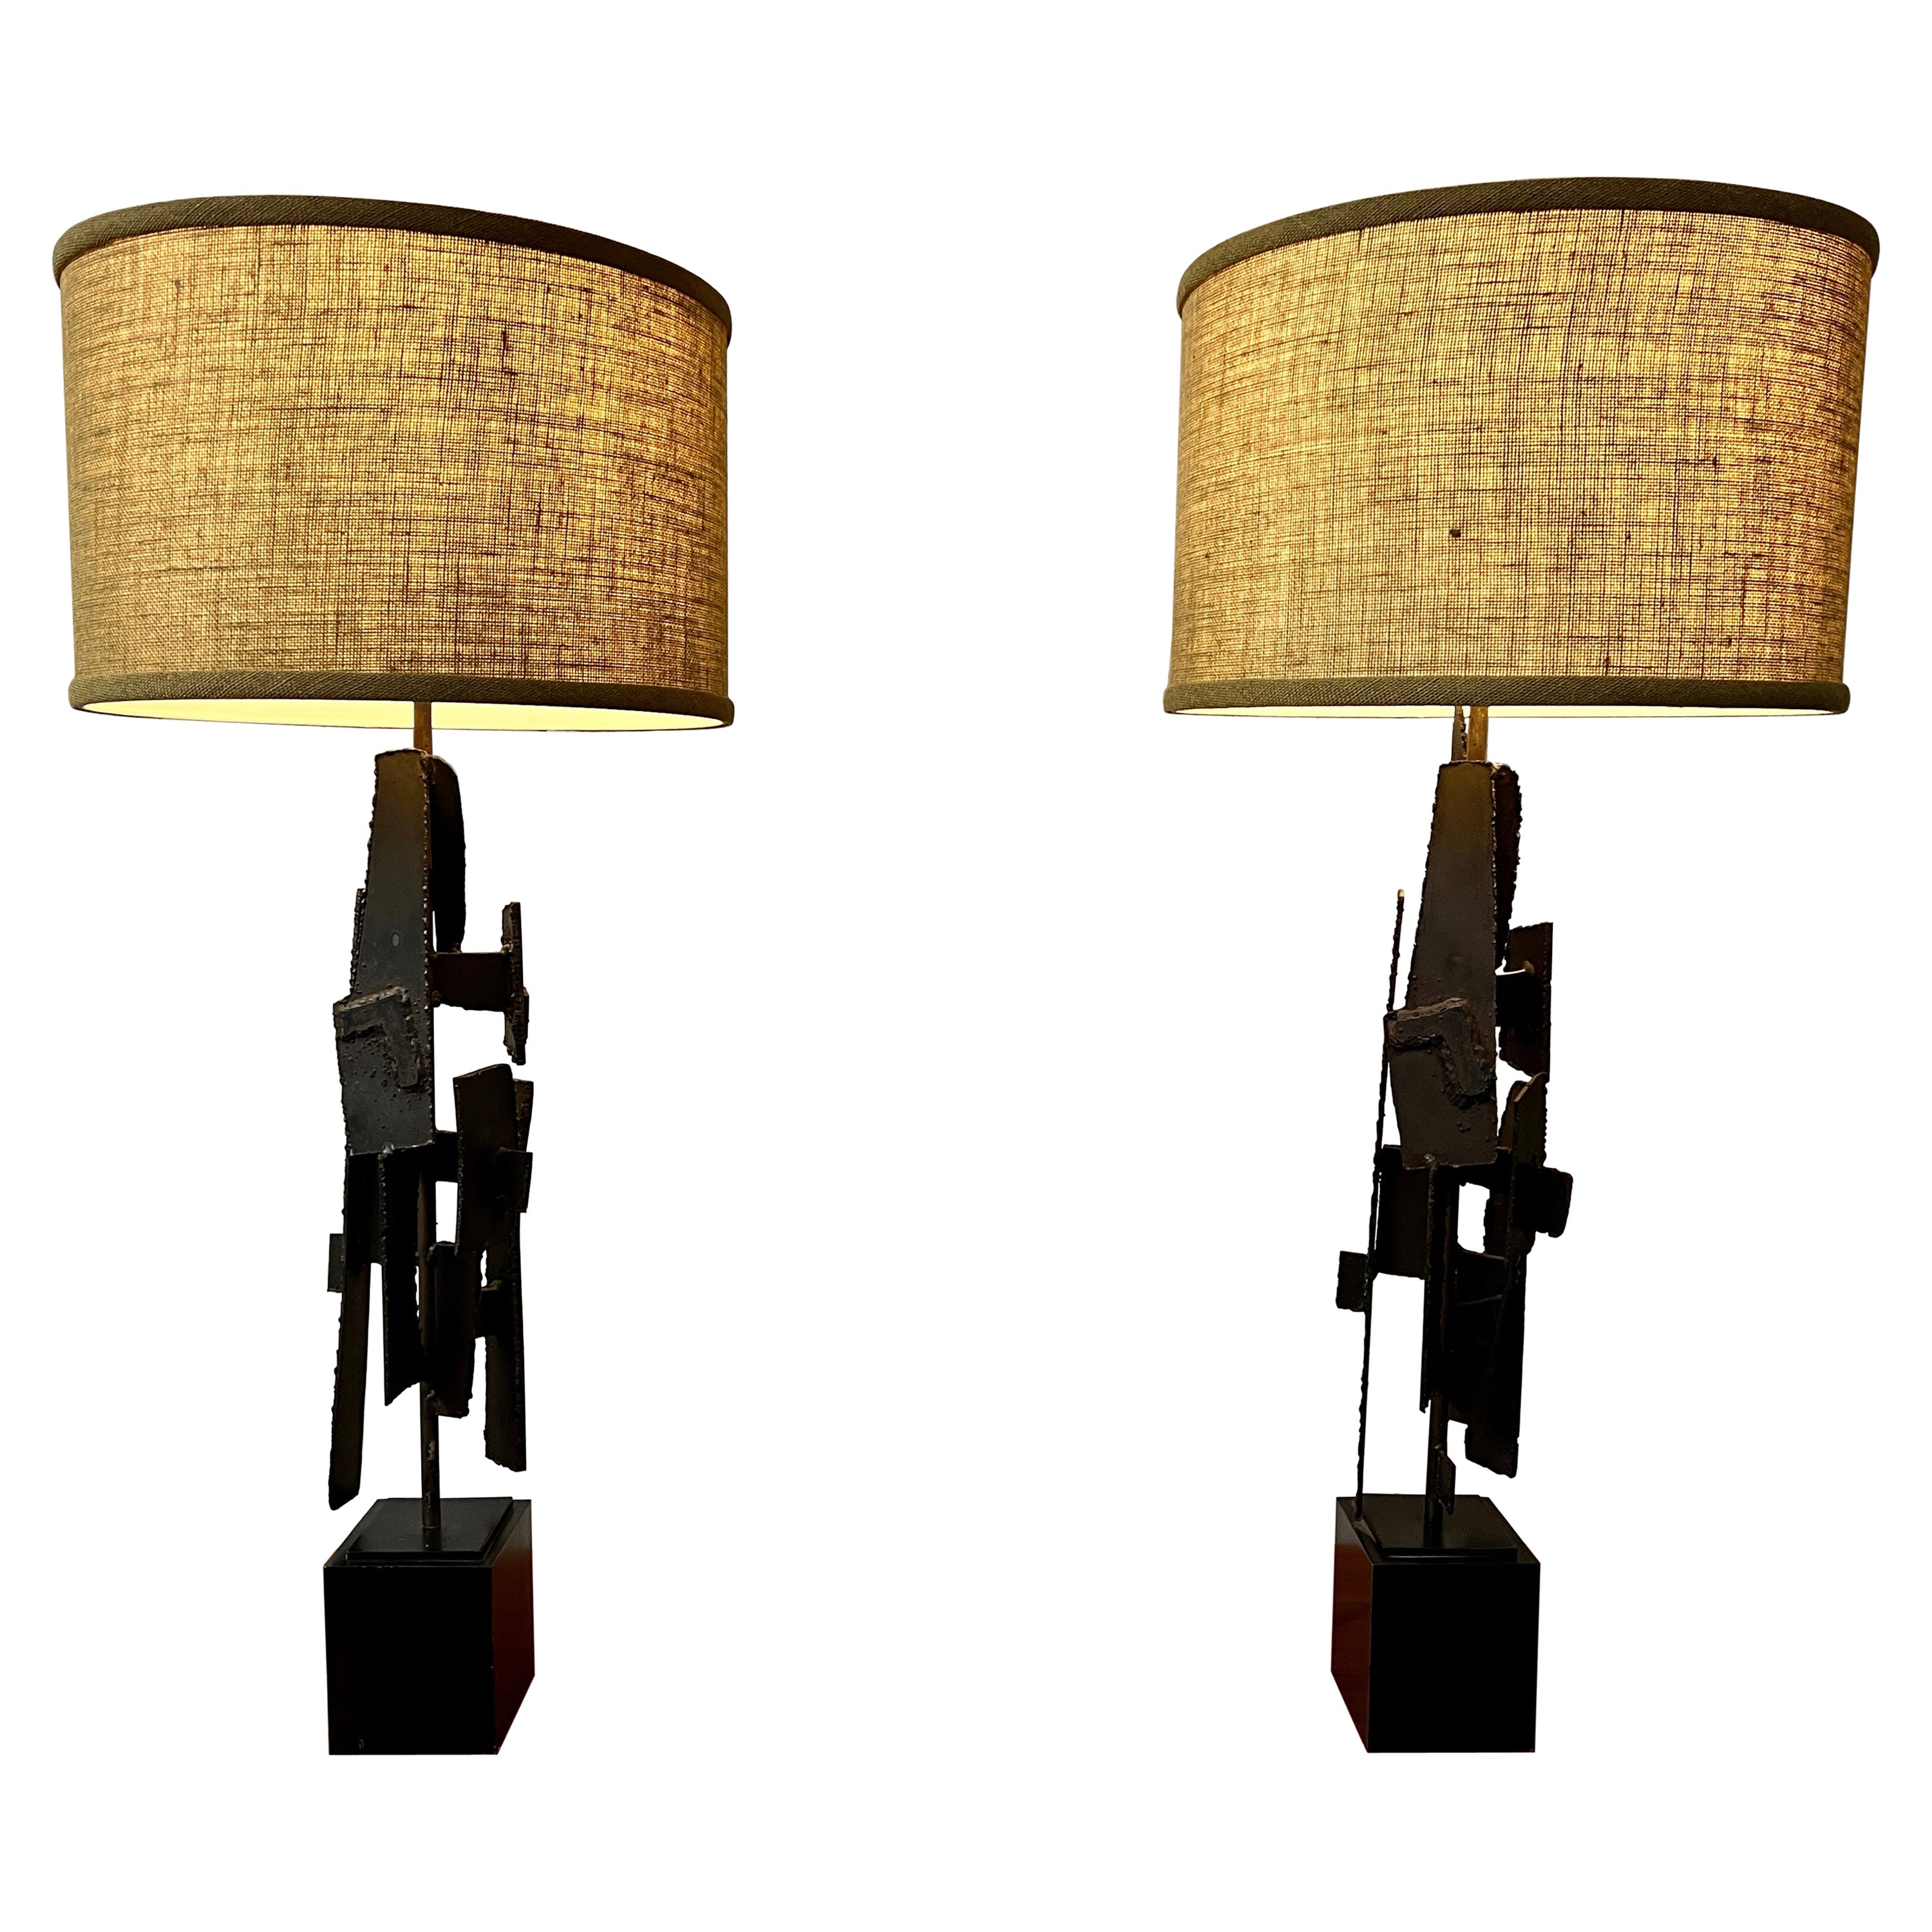 Pair of Sculptural Torch Cut Lamps by Richard Barr